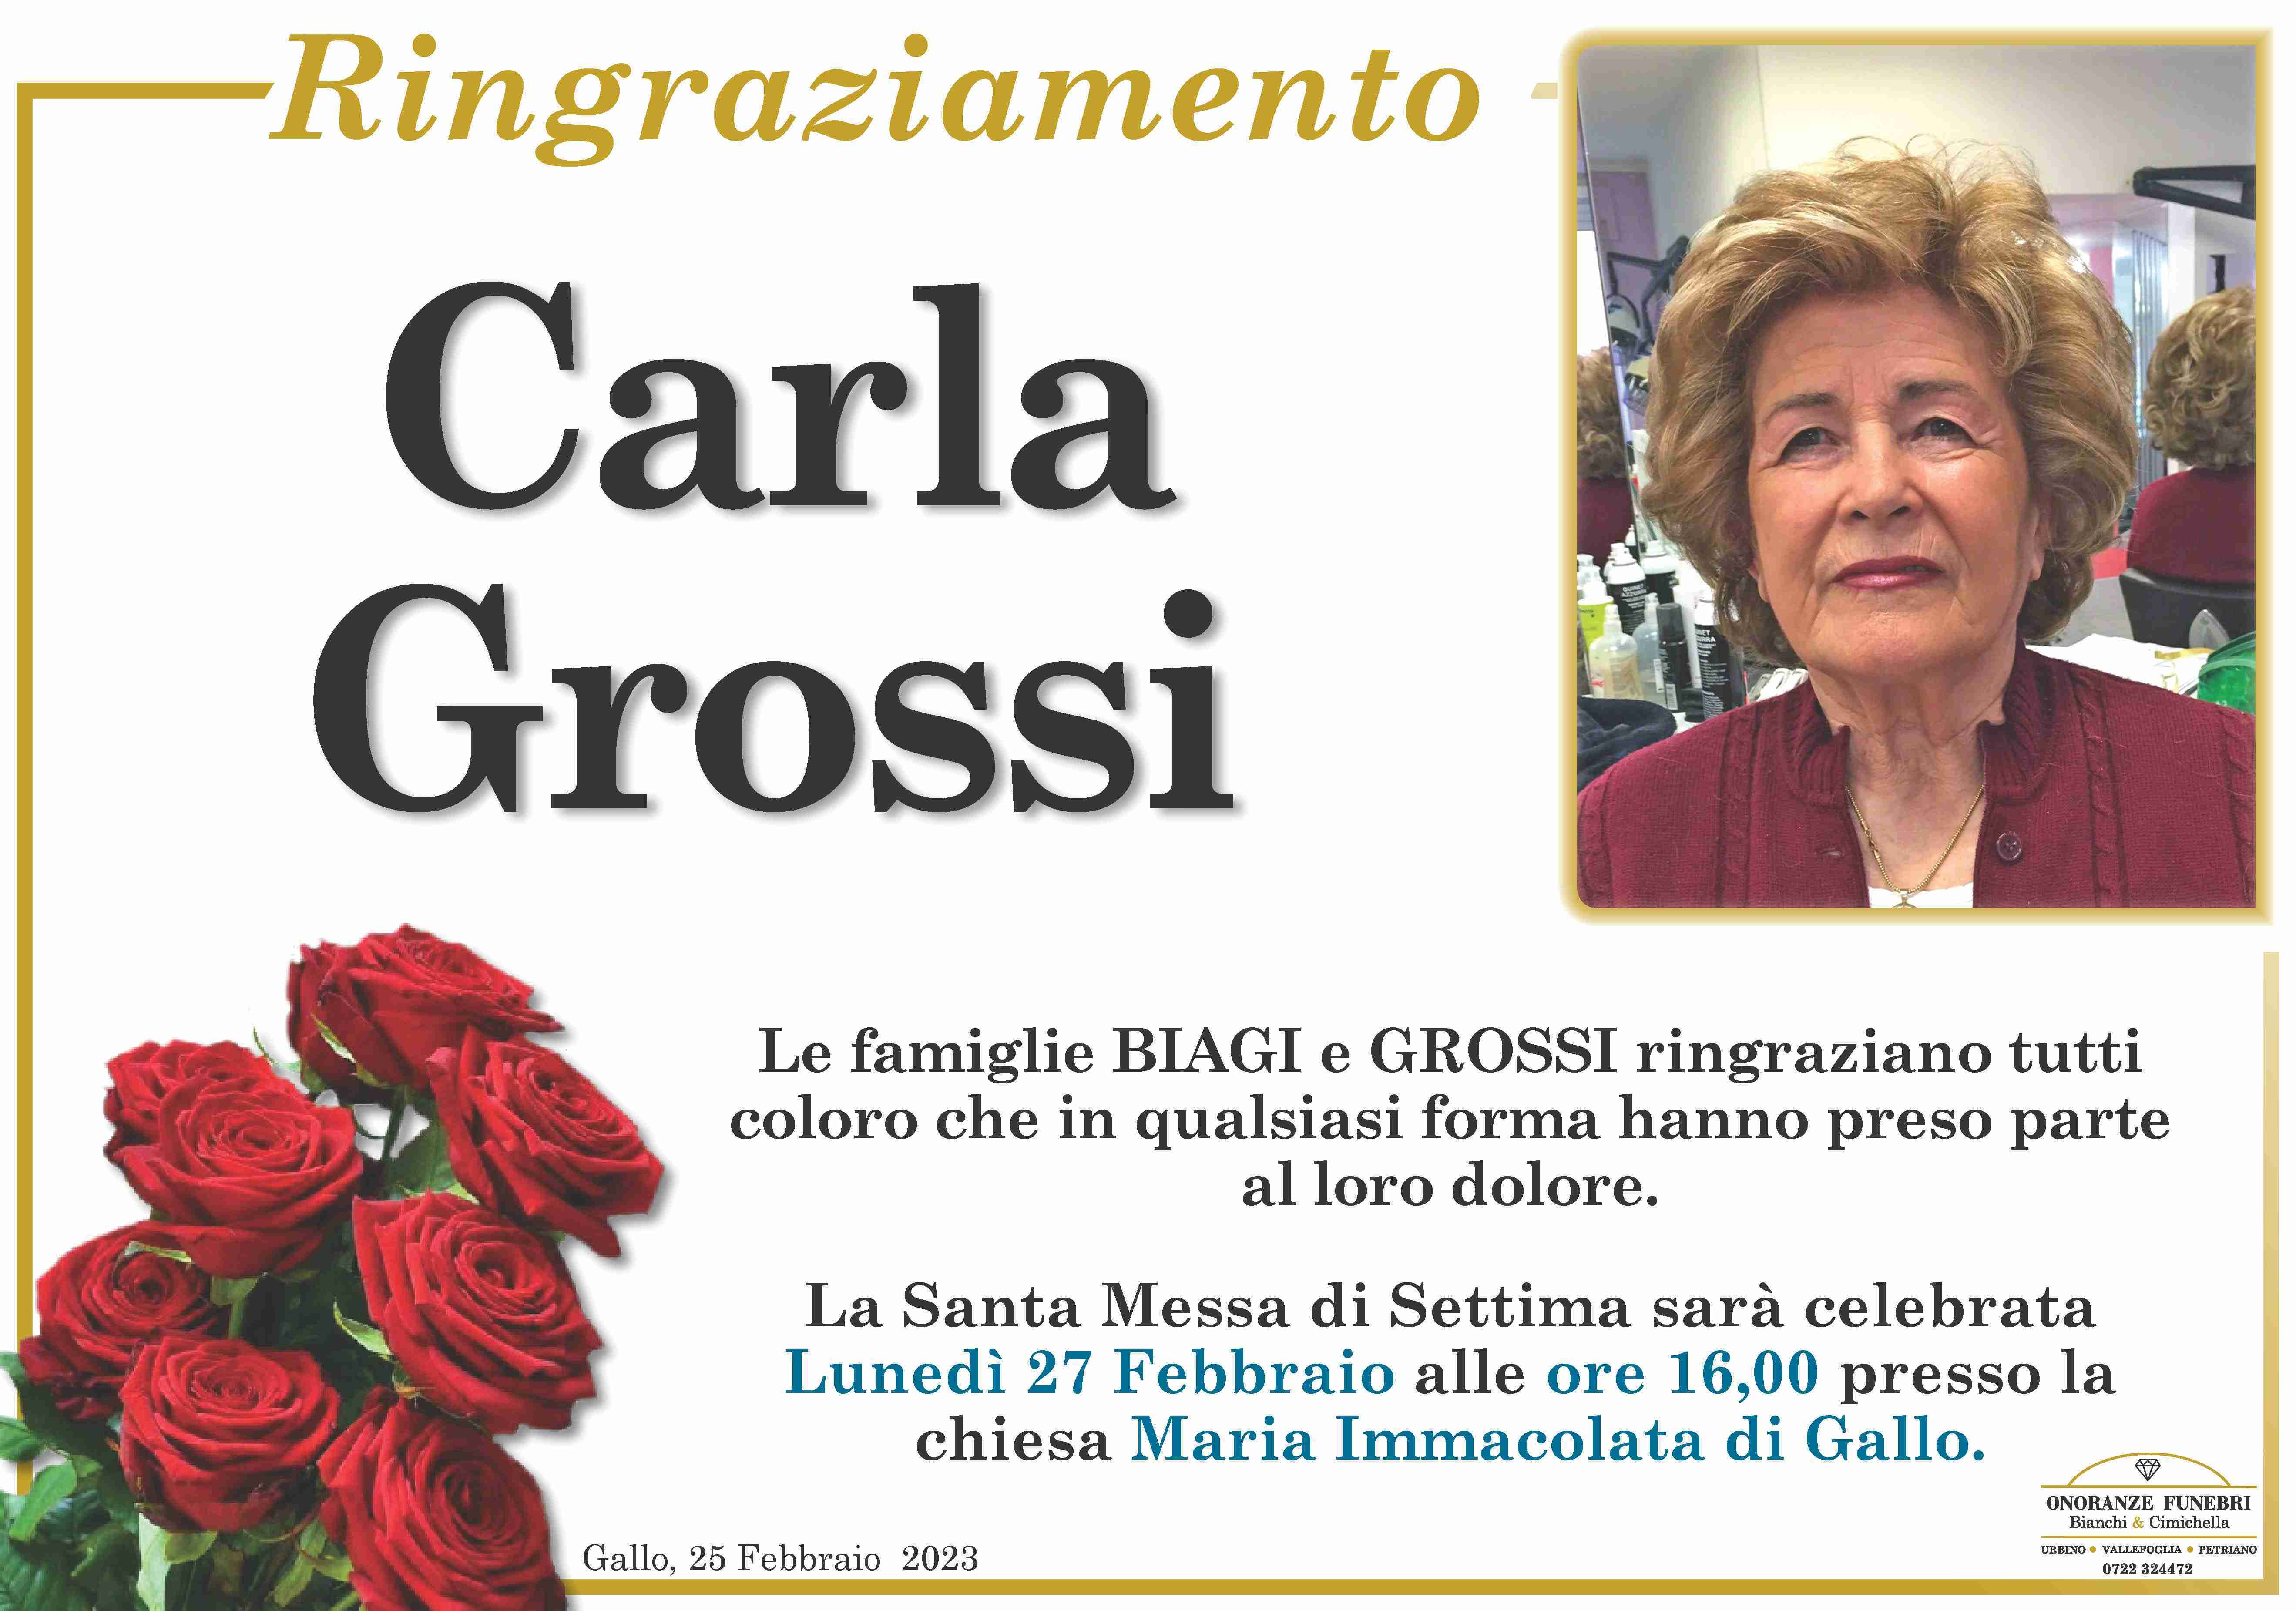 Carla Grossi